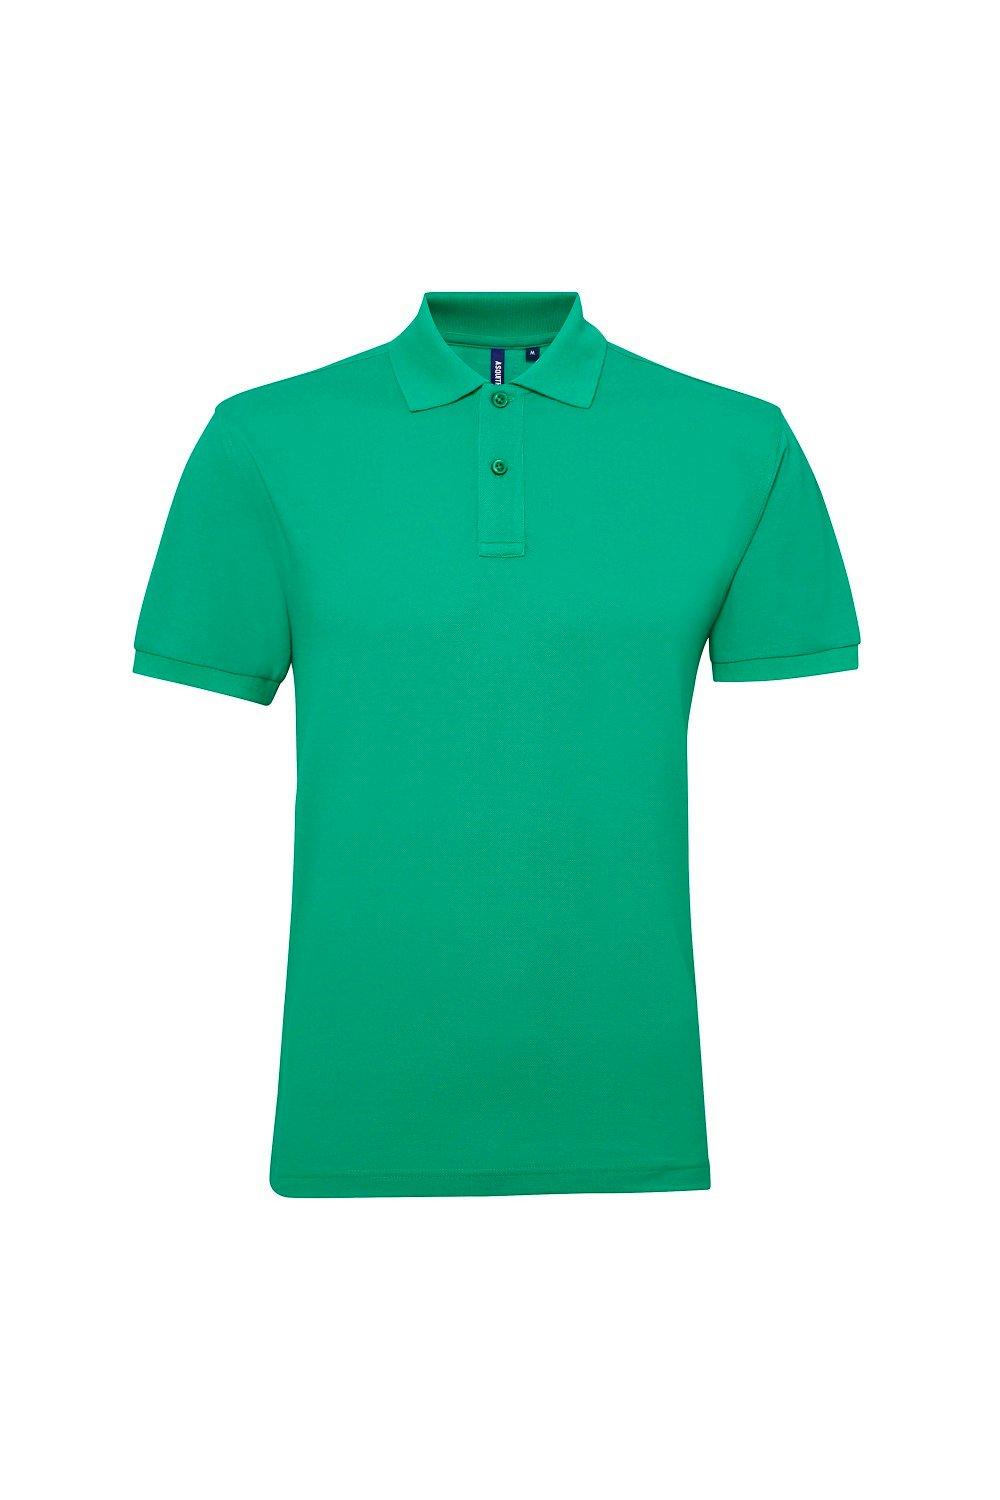 цена Рубашка поло Performance Mix с короткими рукавами Asquith & Fox, зеленый